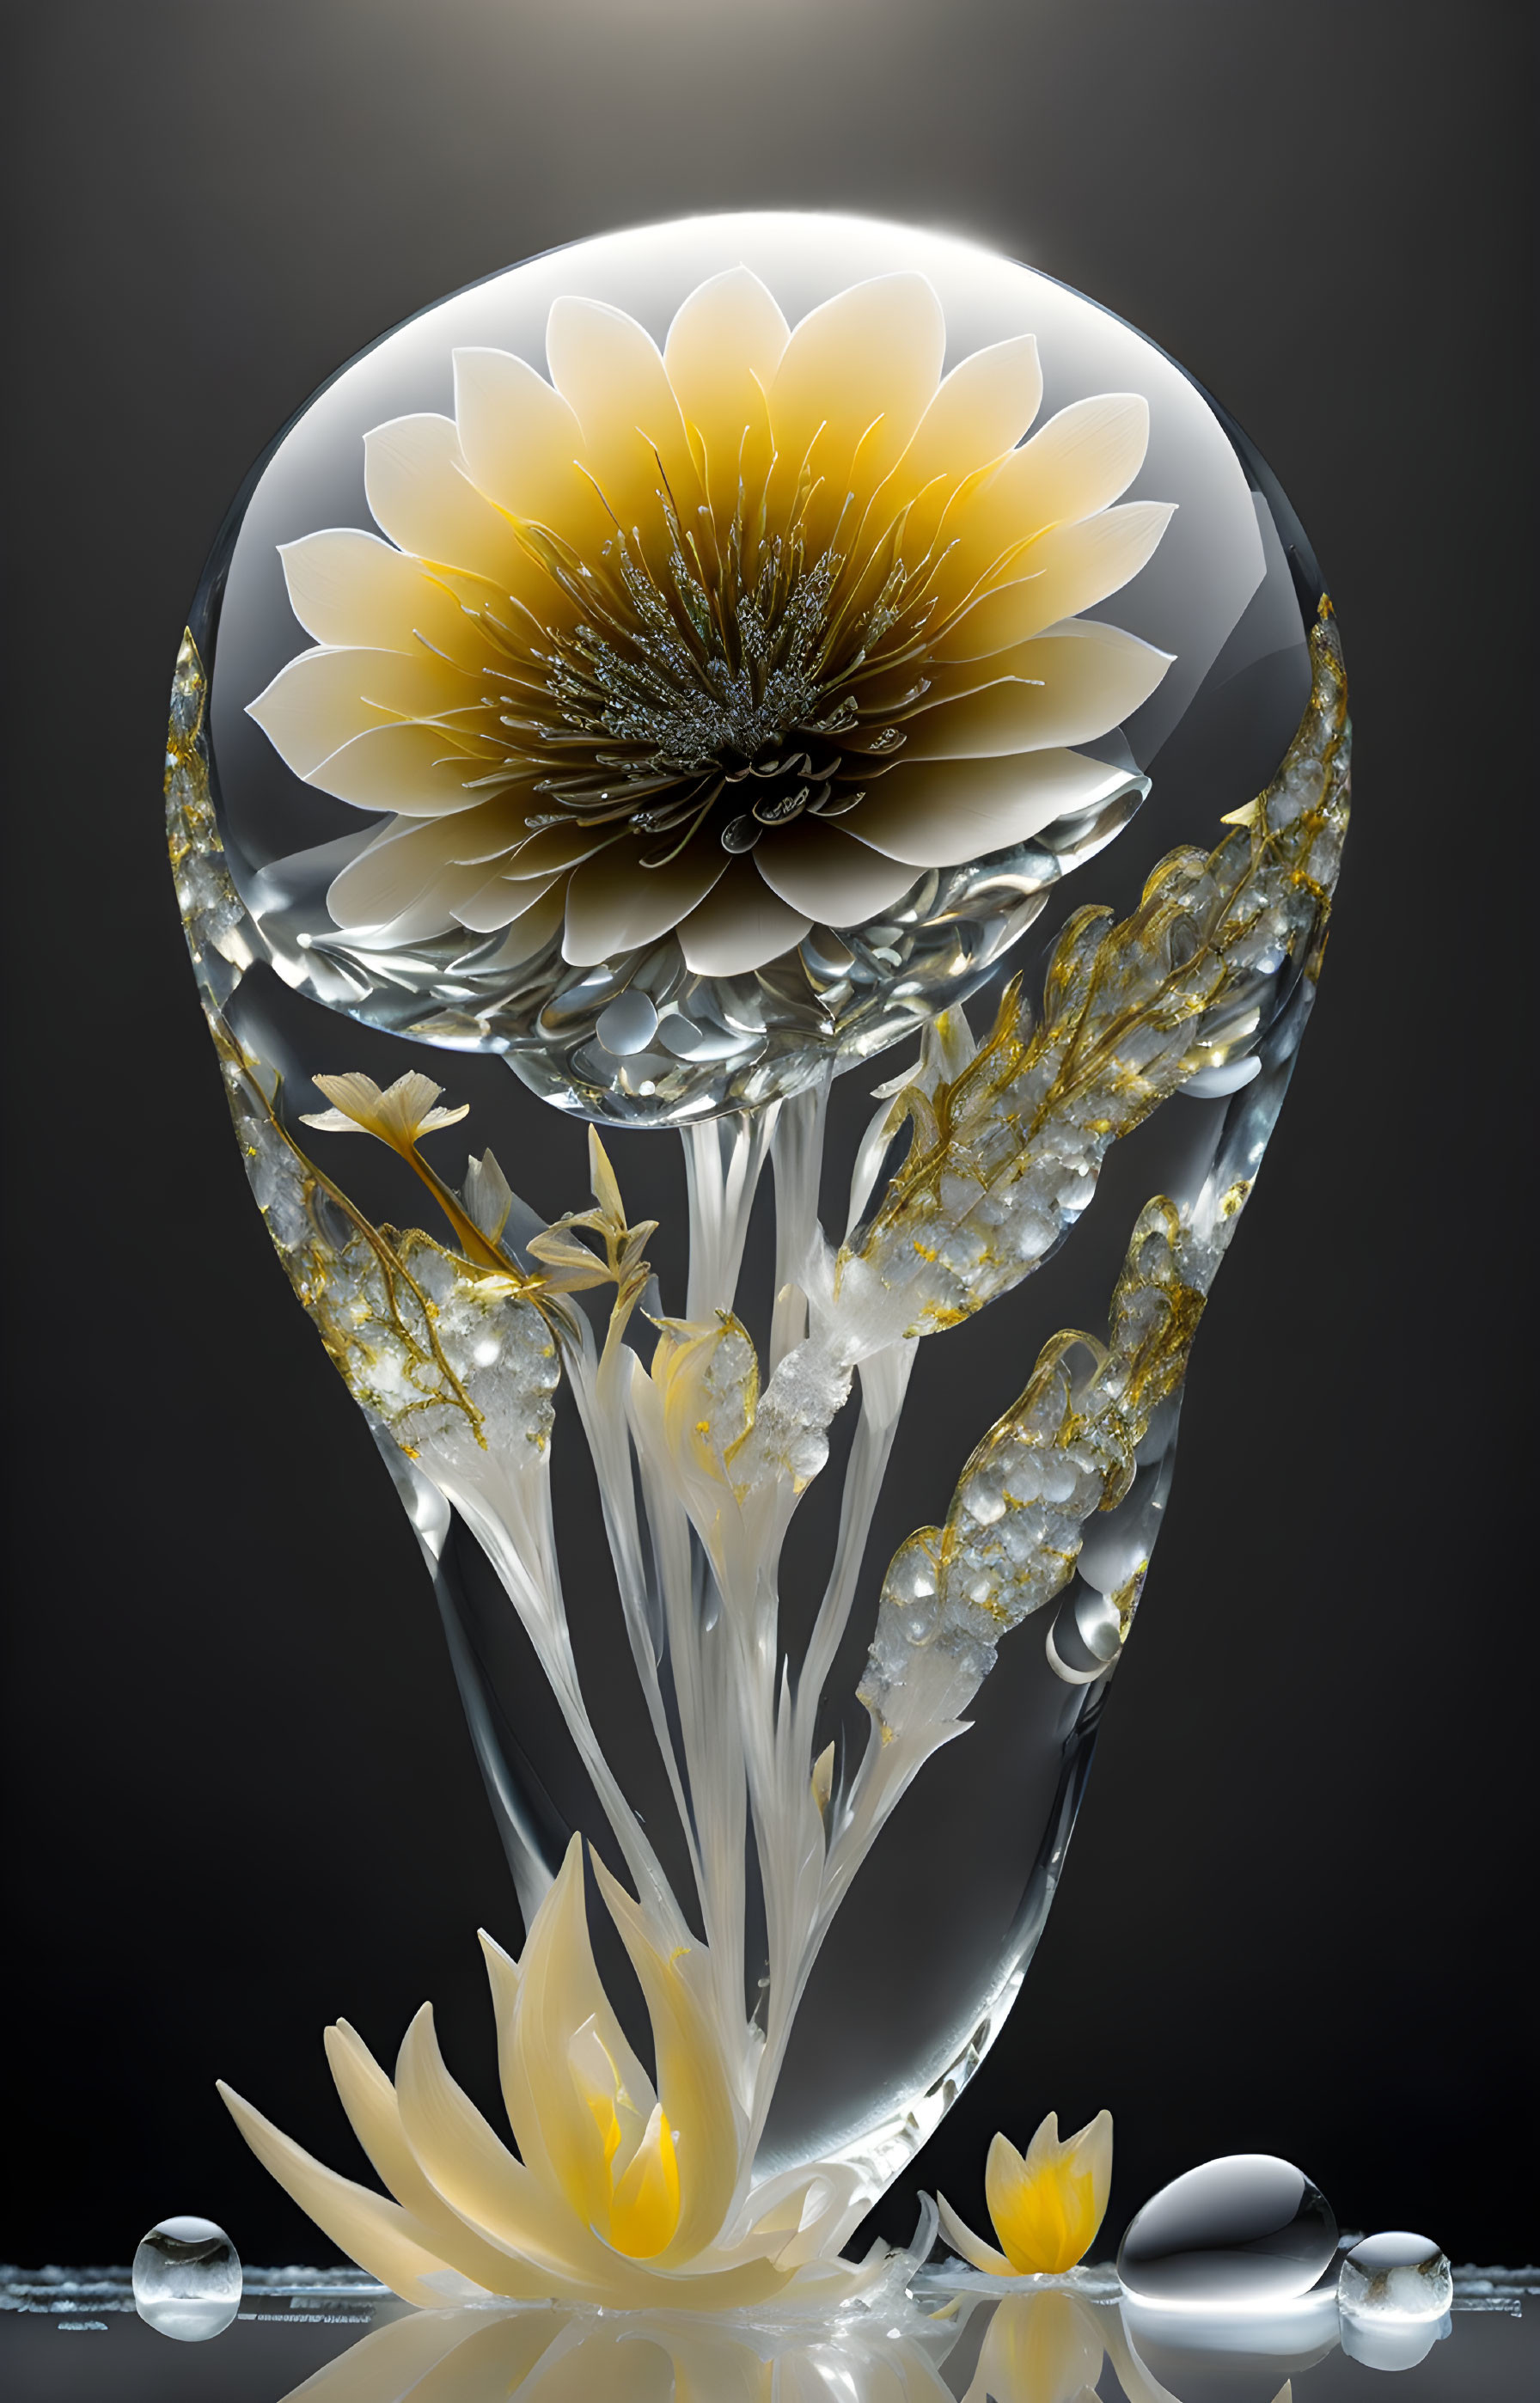 Translucent vase with golden flower design on dark background